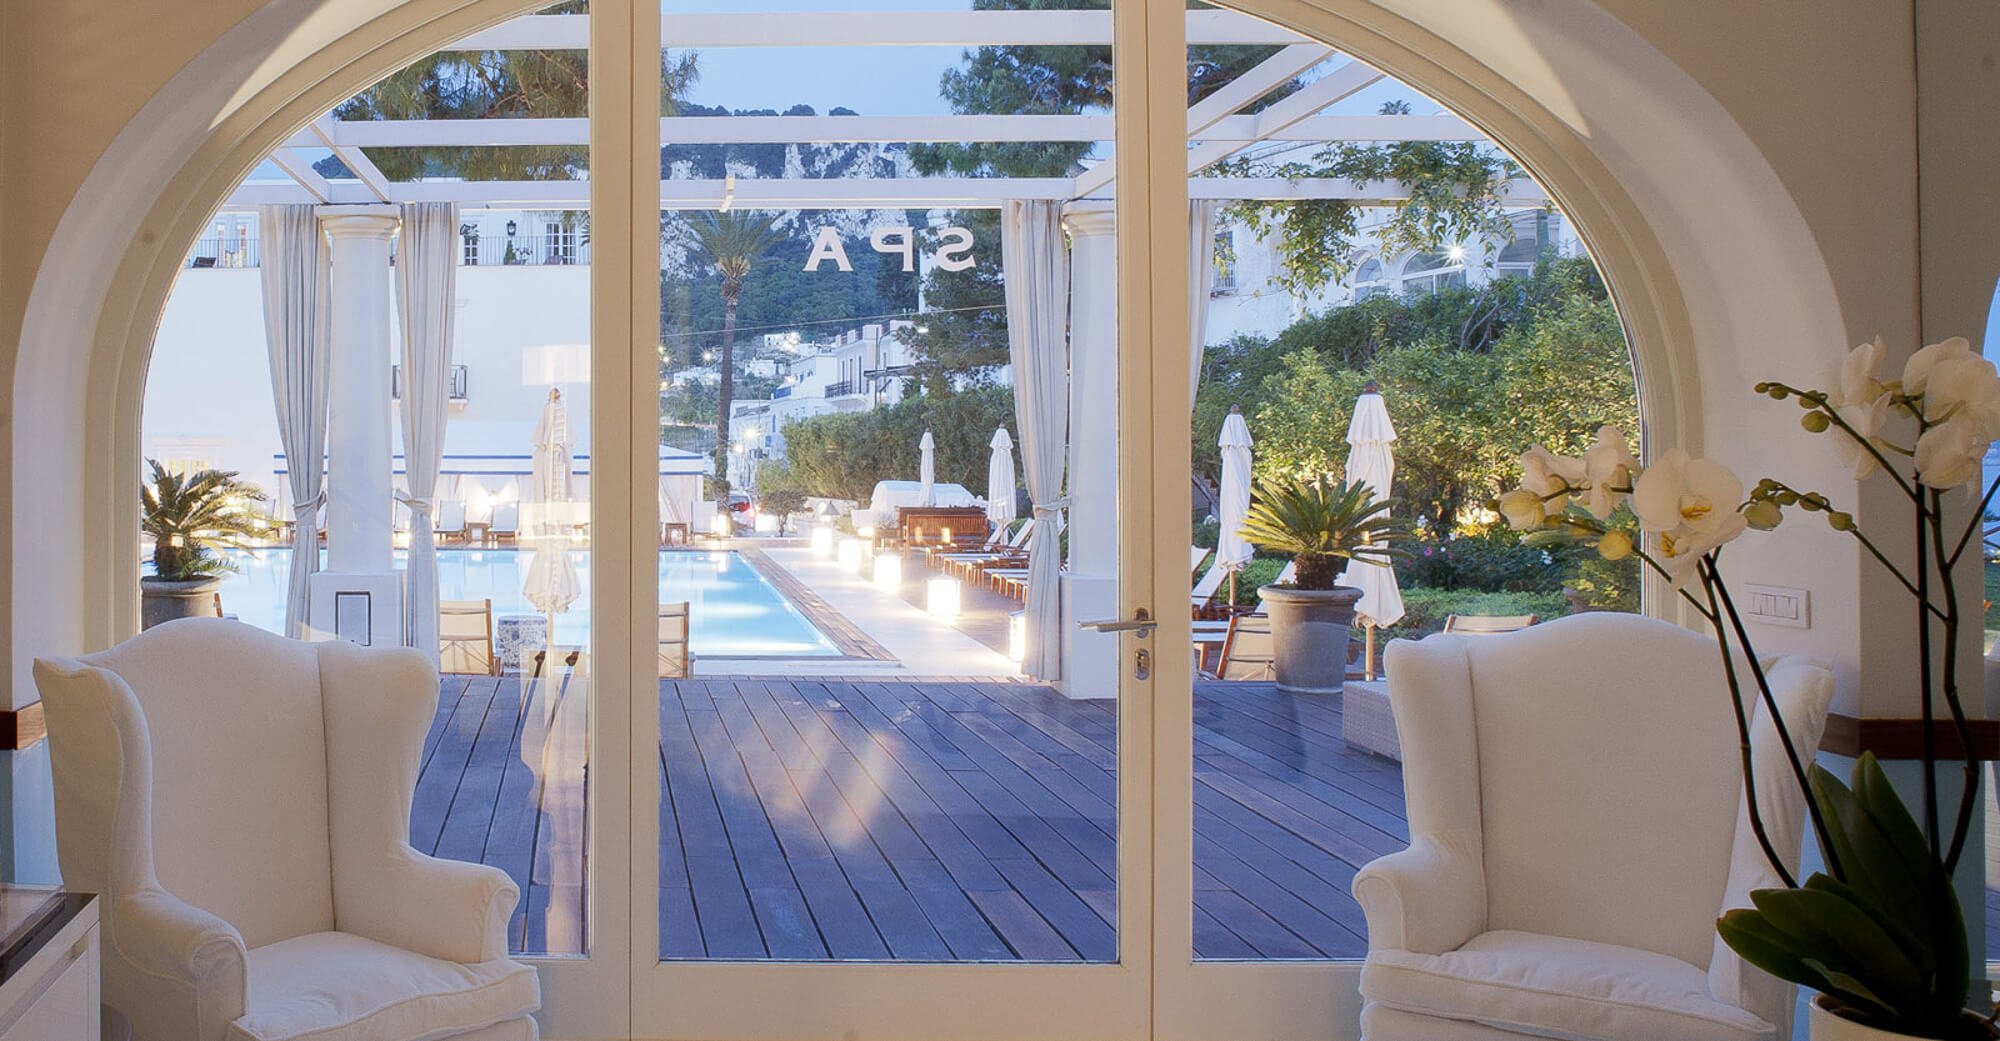 The best luxury hotels in Capri includes JK Place